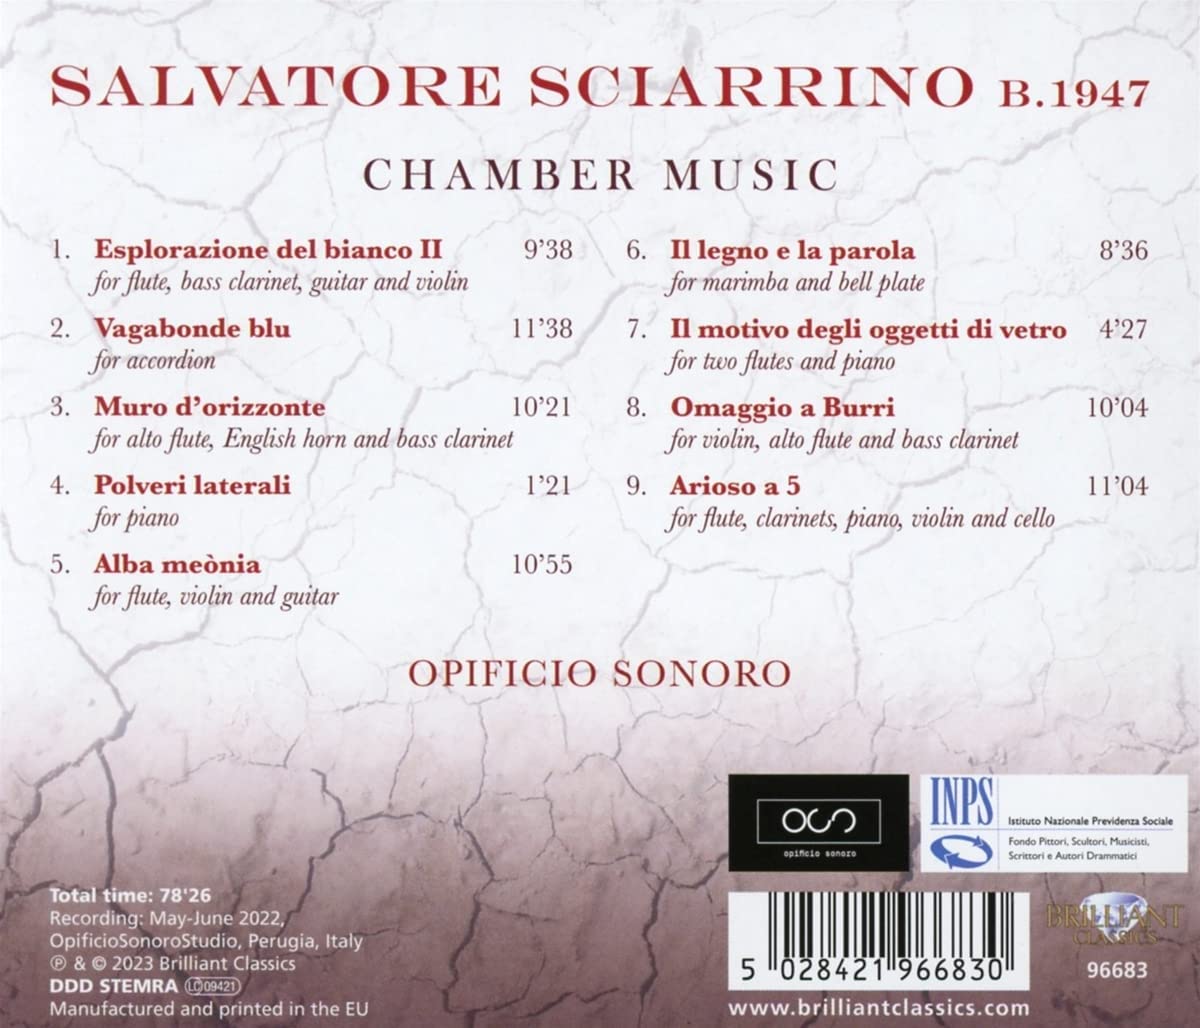 Opificio Sonoro 스키아리노: 실내악 작품 (Sciarrino: Chamber Music)